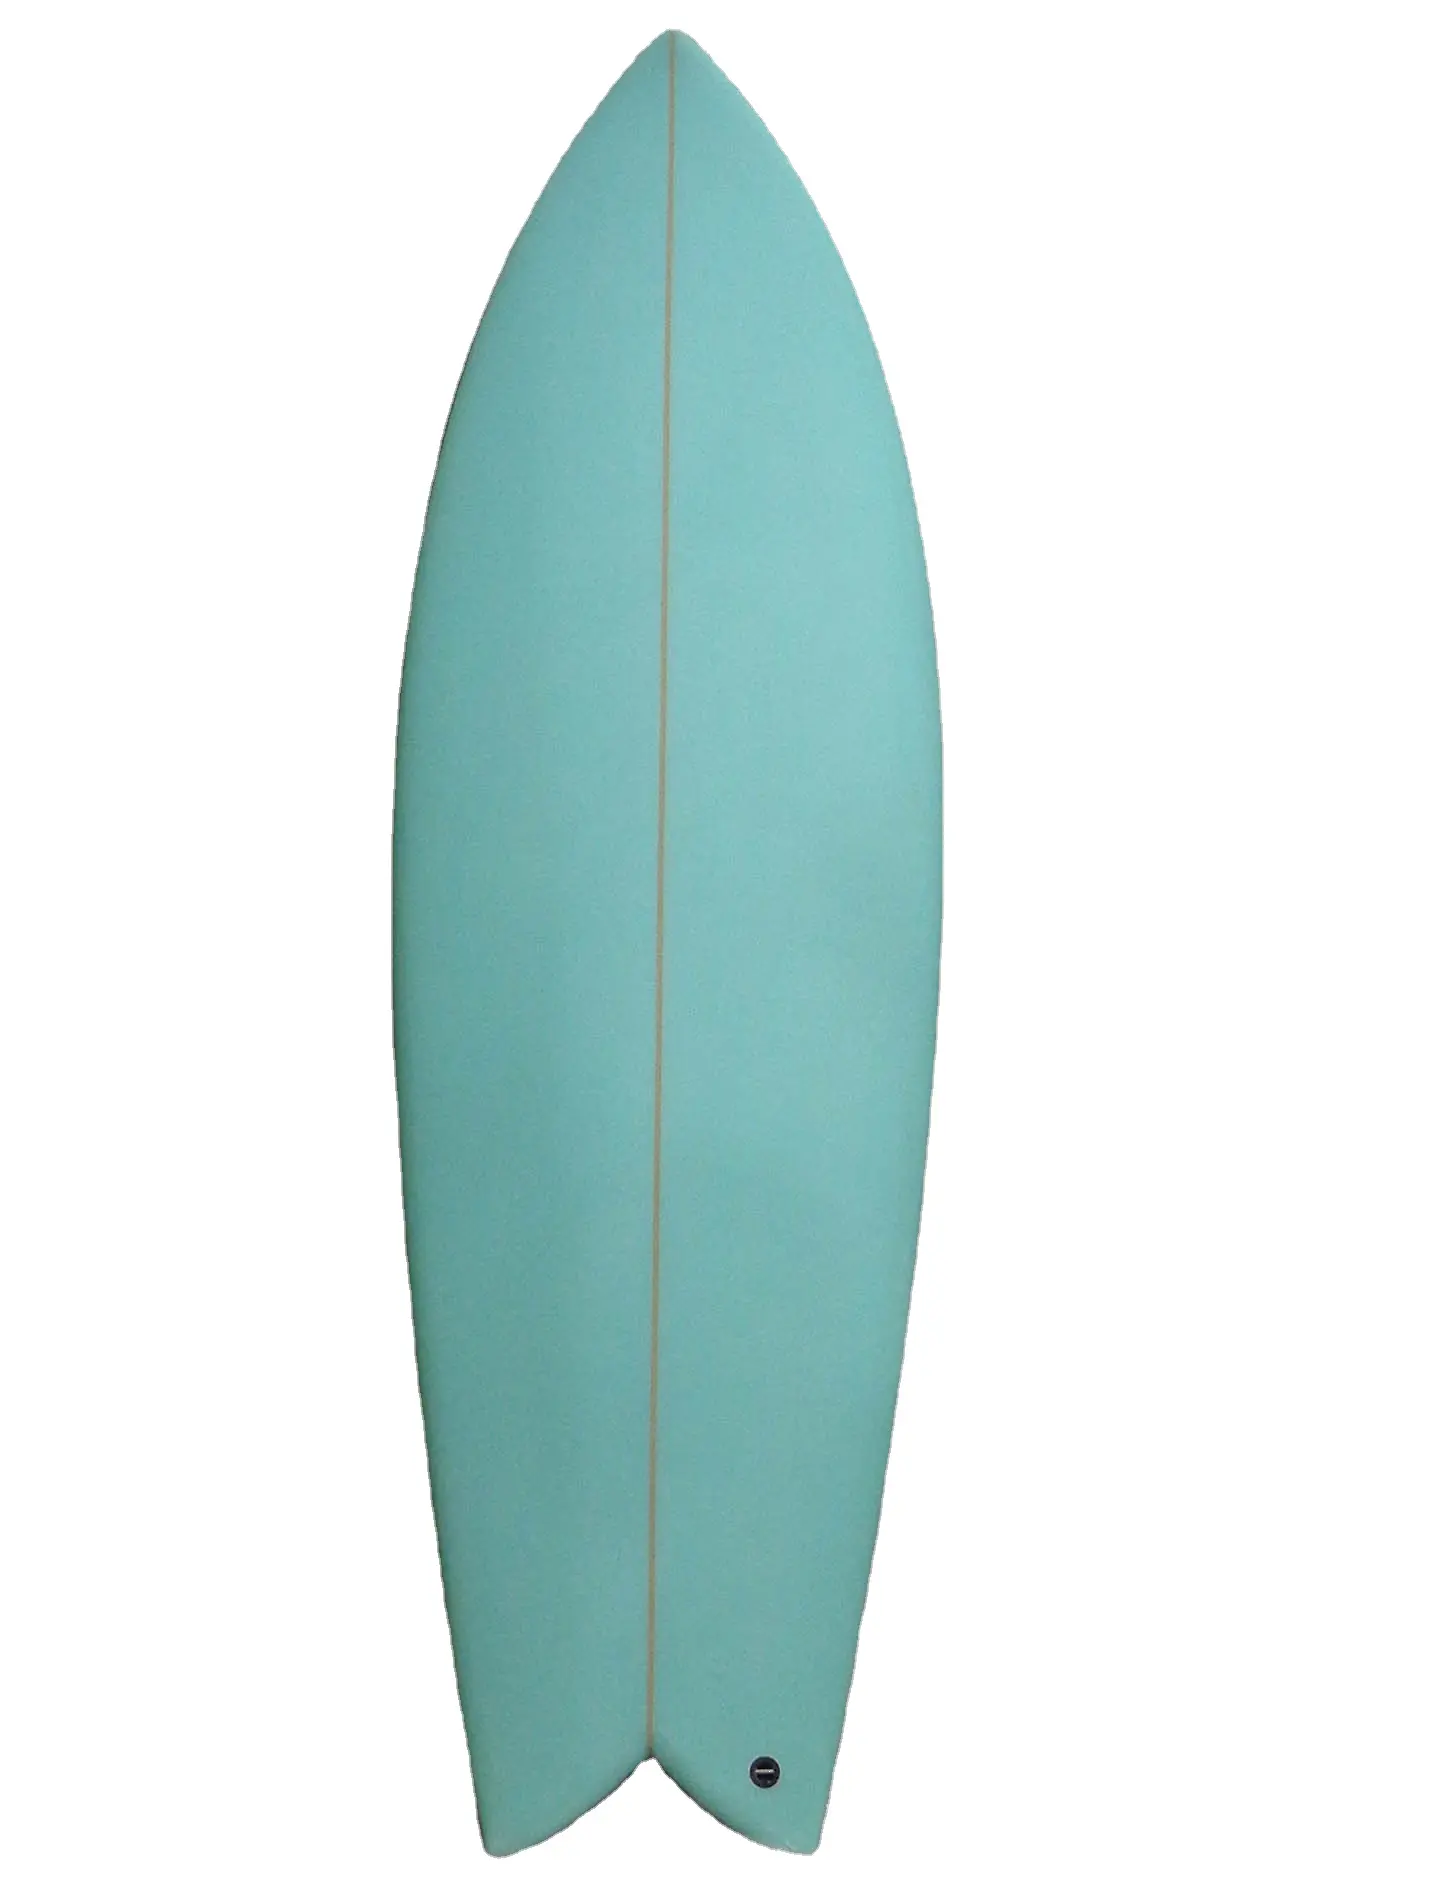 Fiberglass epoxy Classic Twin Fin small wave surf board fish tail shortboard